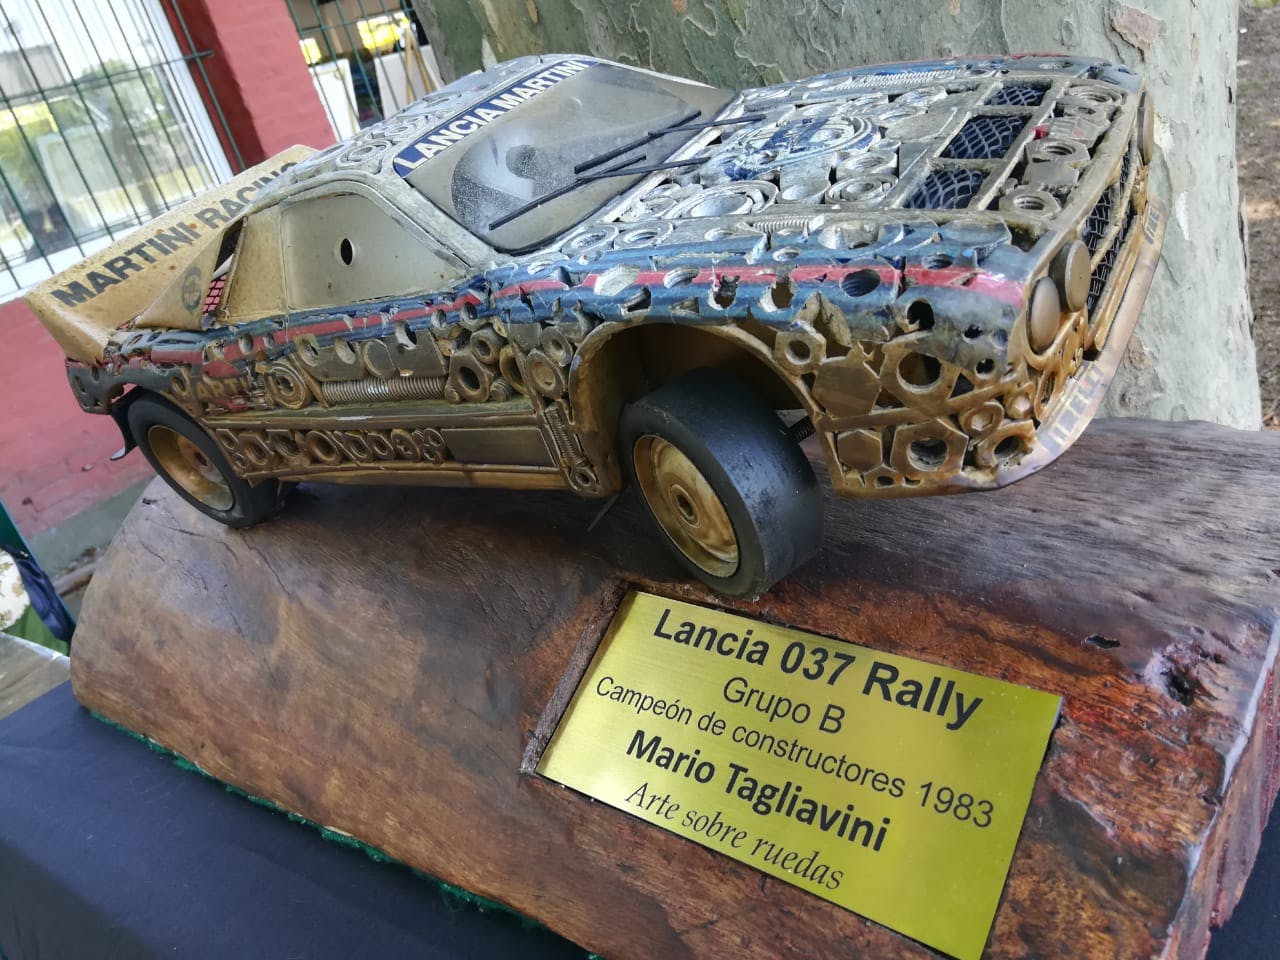 Lancia Mario Tagliavini auto sculpture